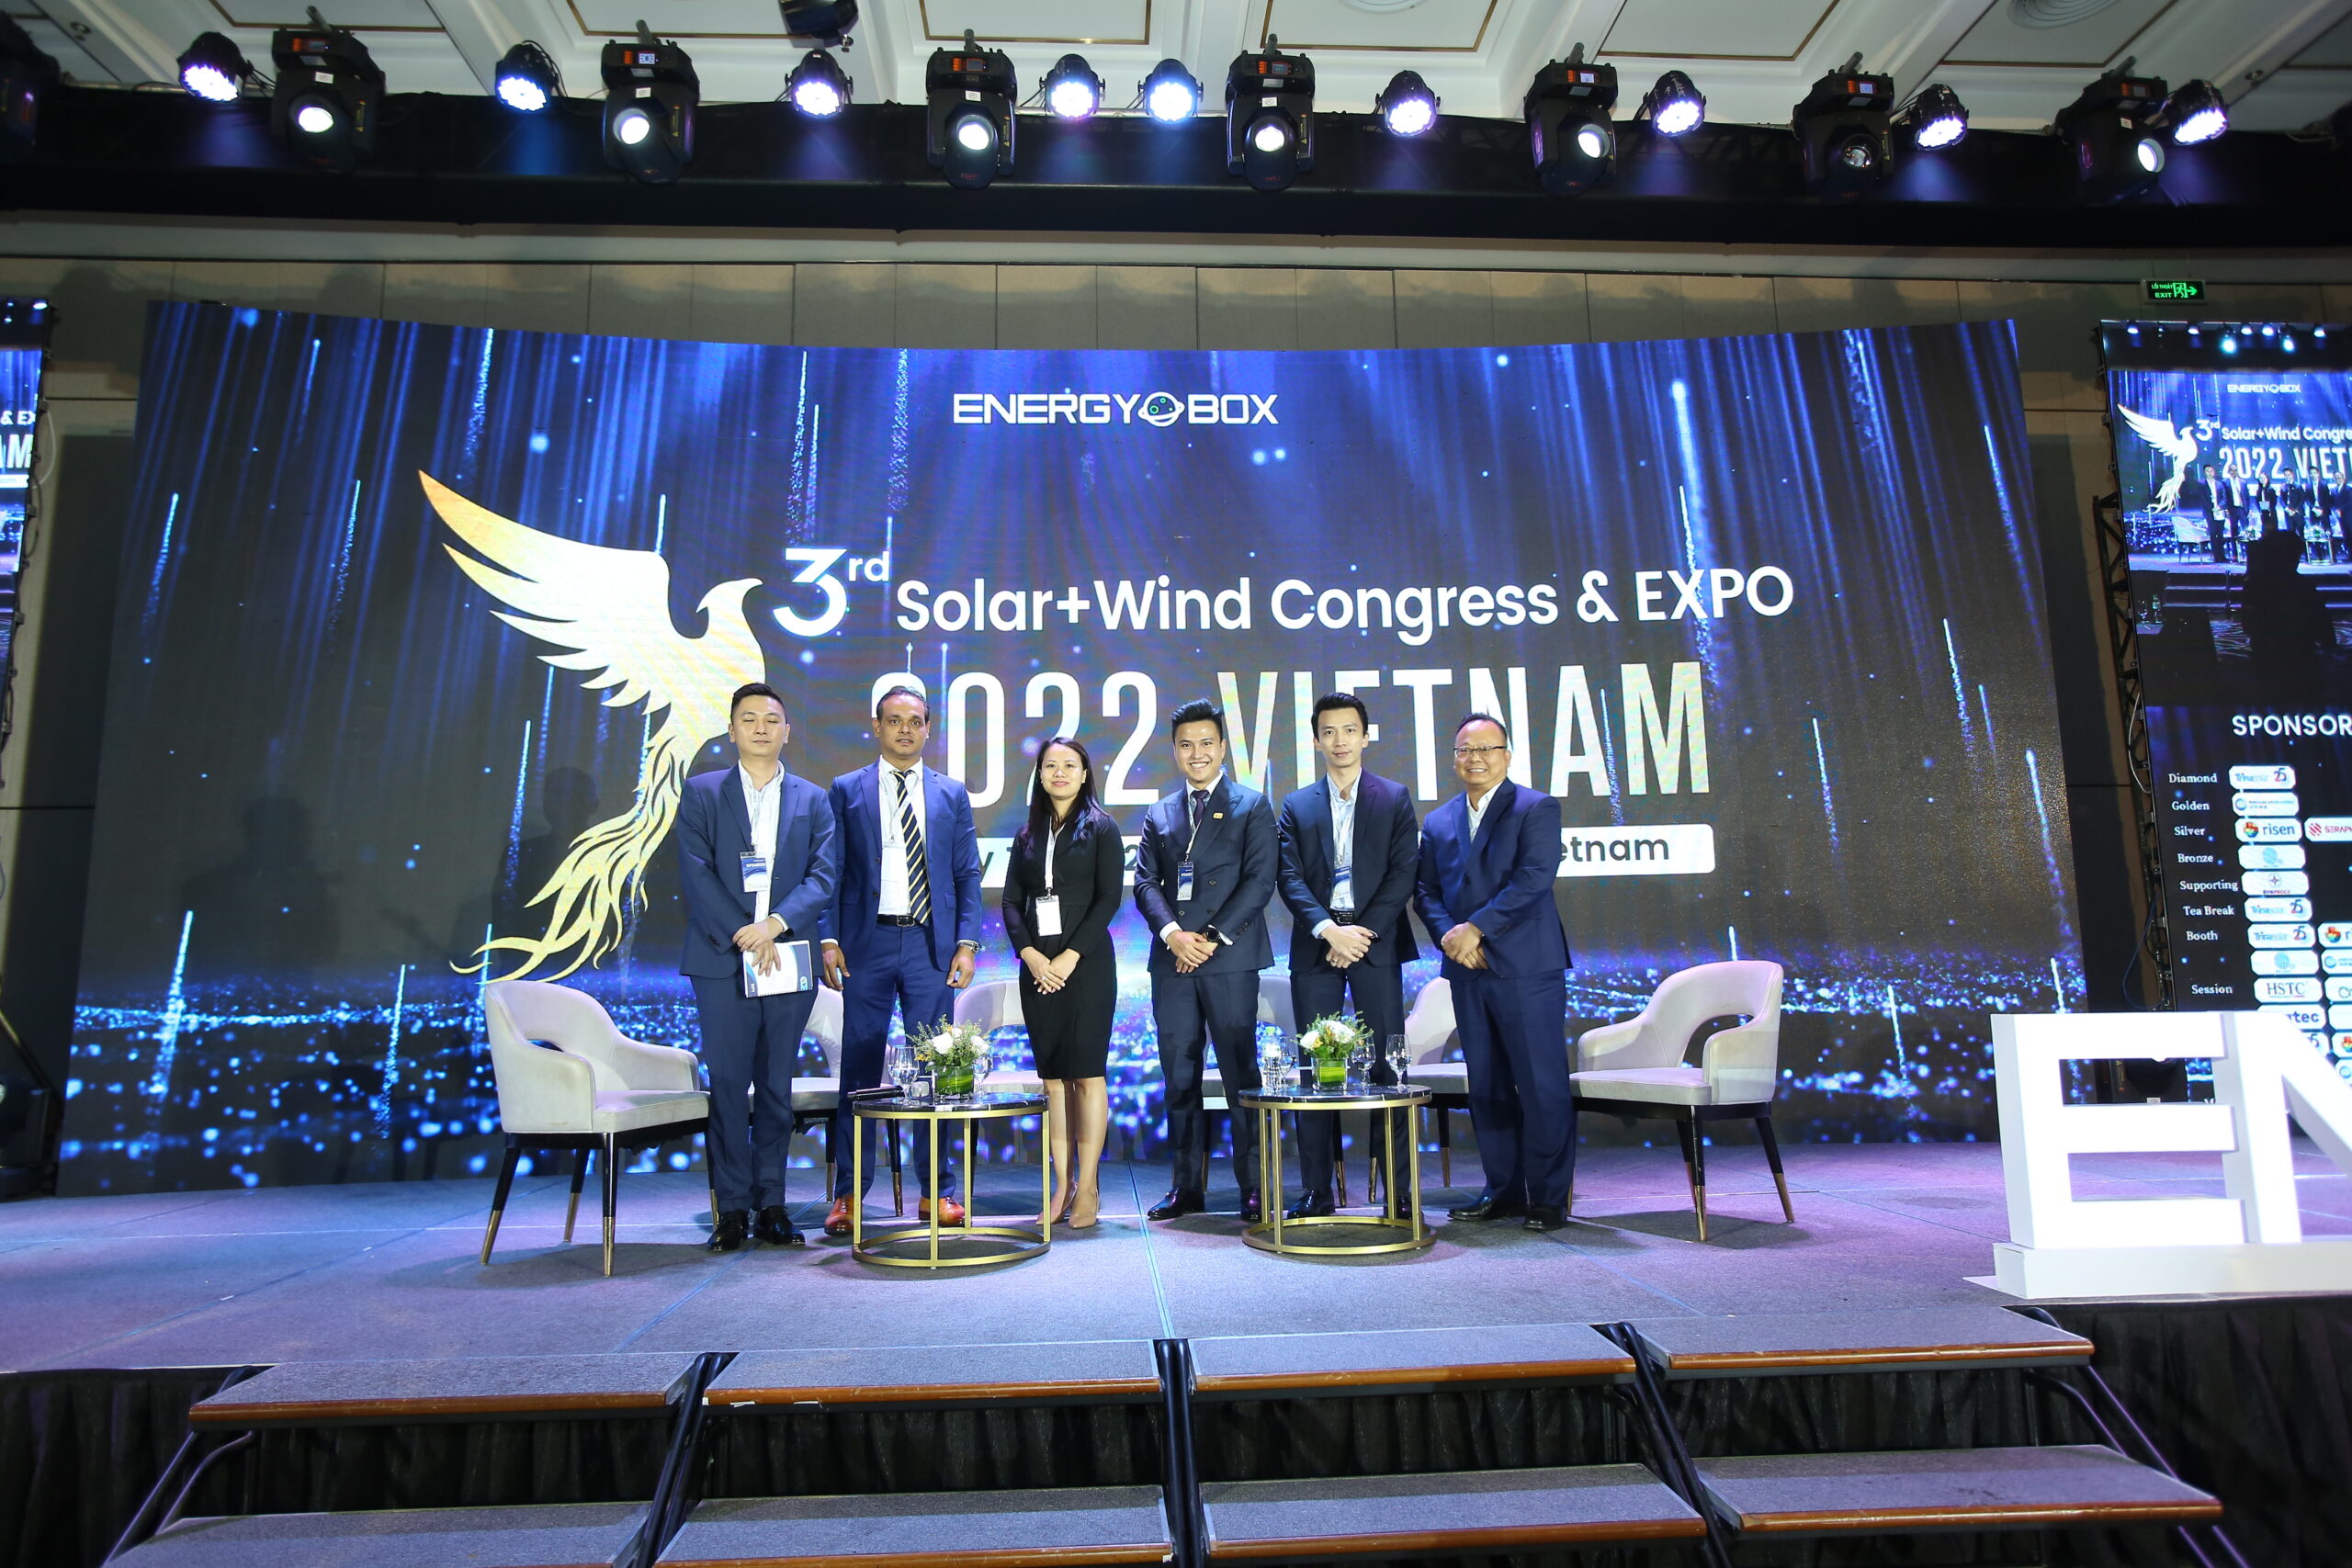 greenyellow 3rd Solar+Wind Congress & EXPO Vietnam 2022